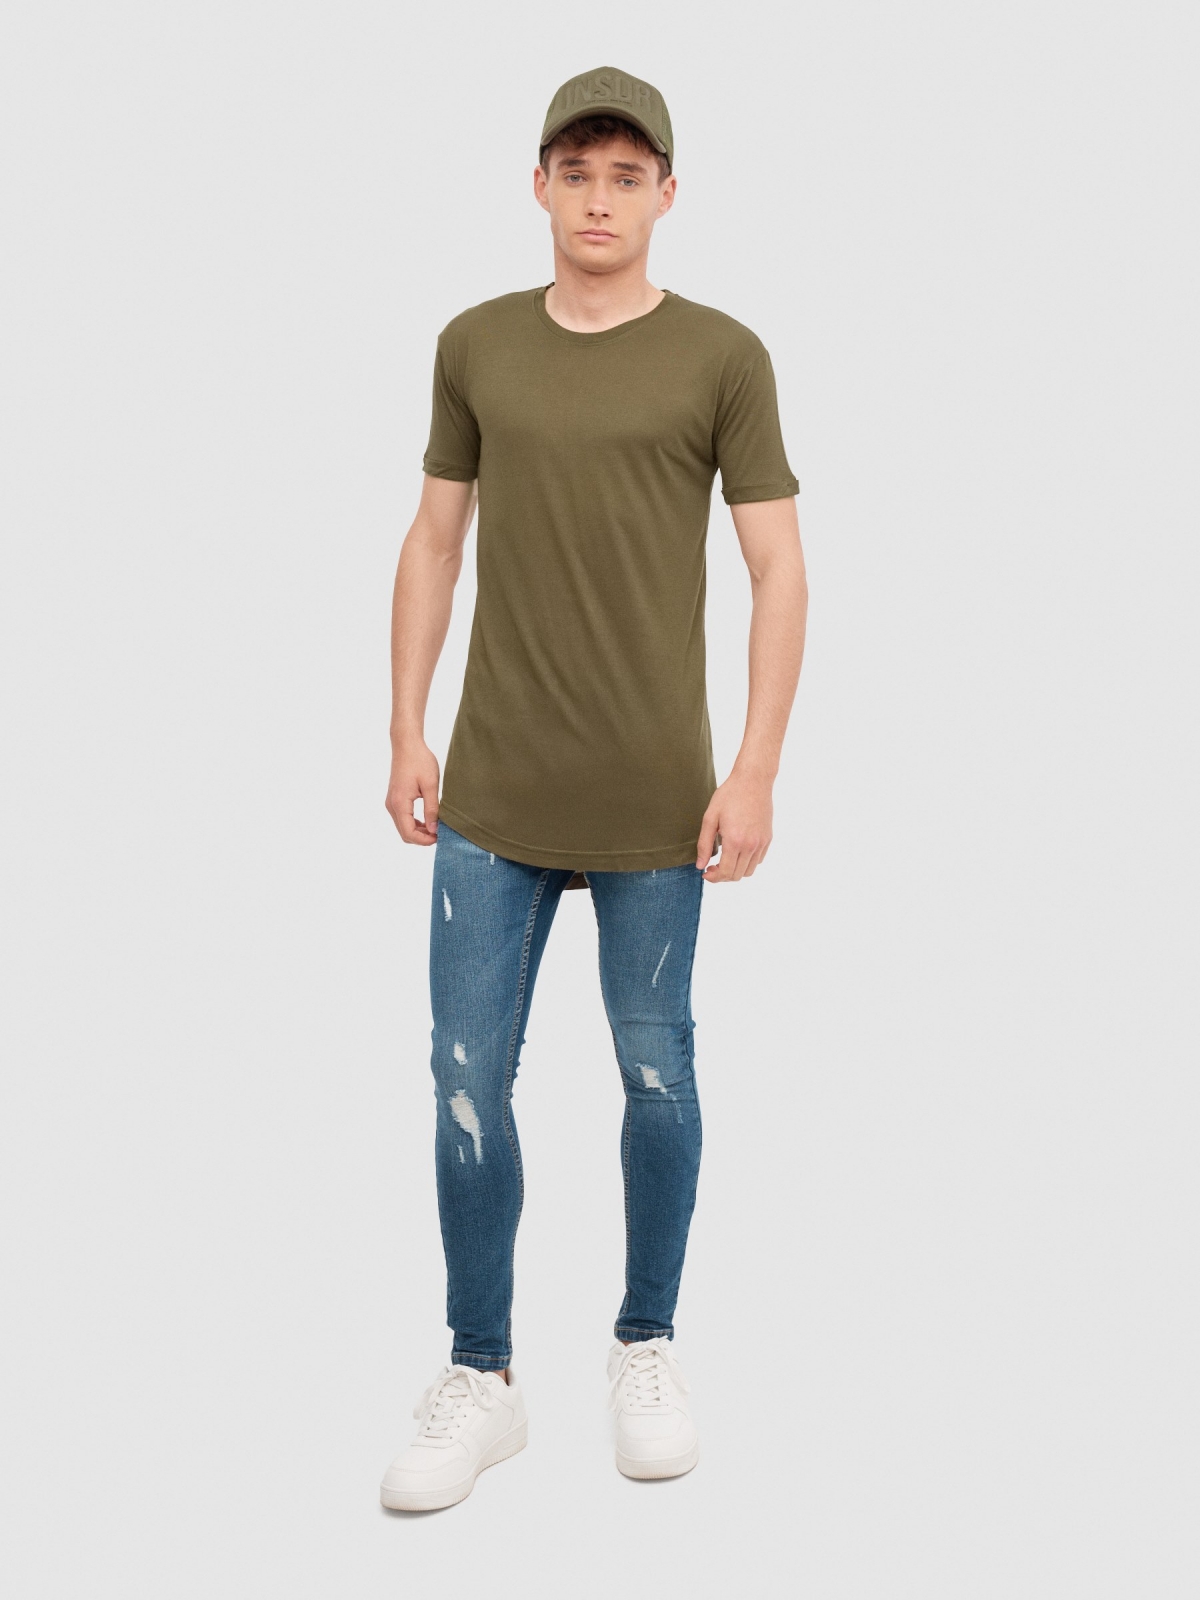 Long basic t-shirt khaki front view